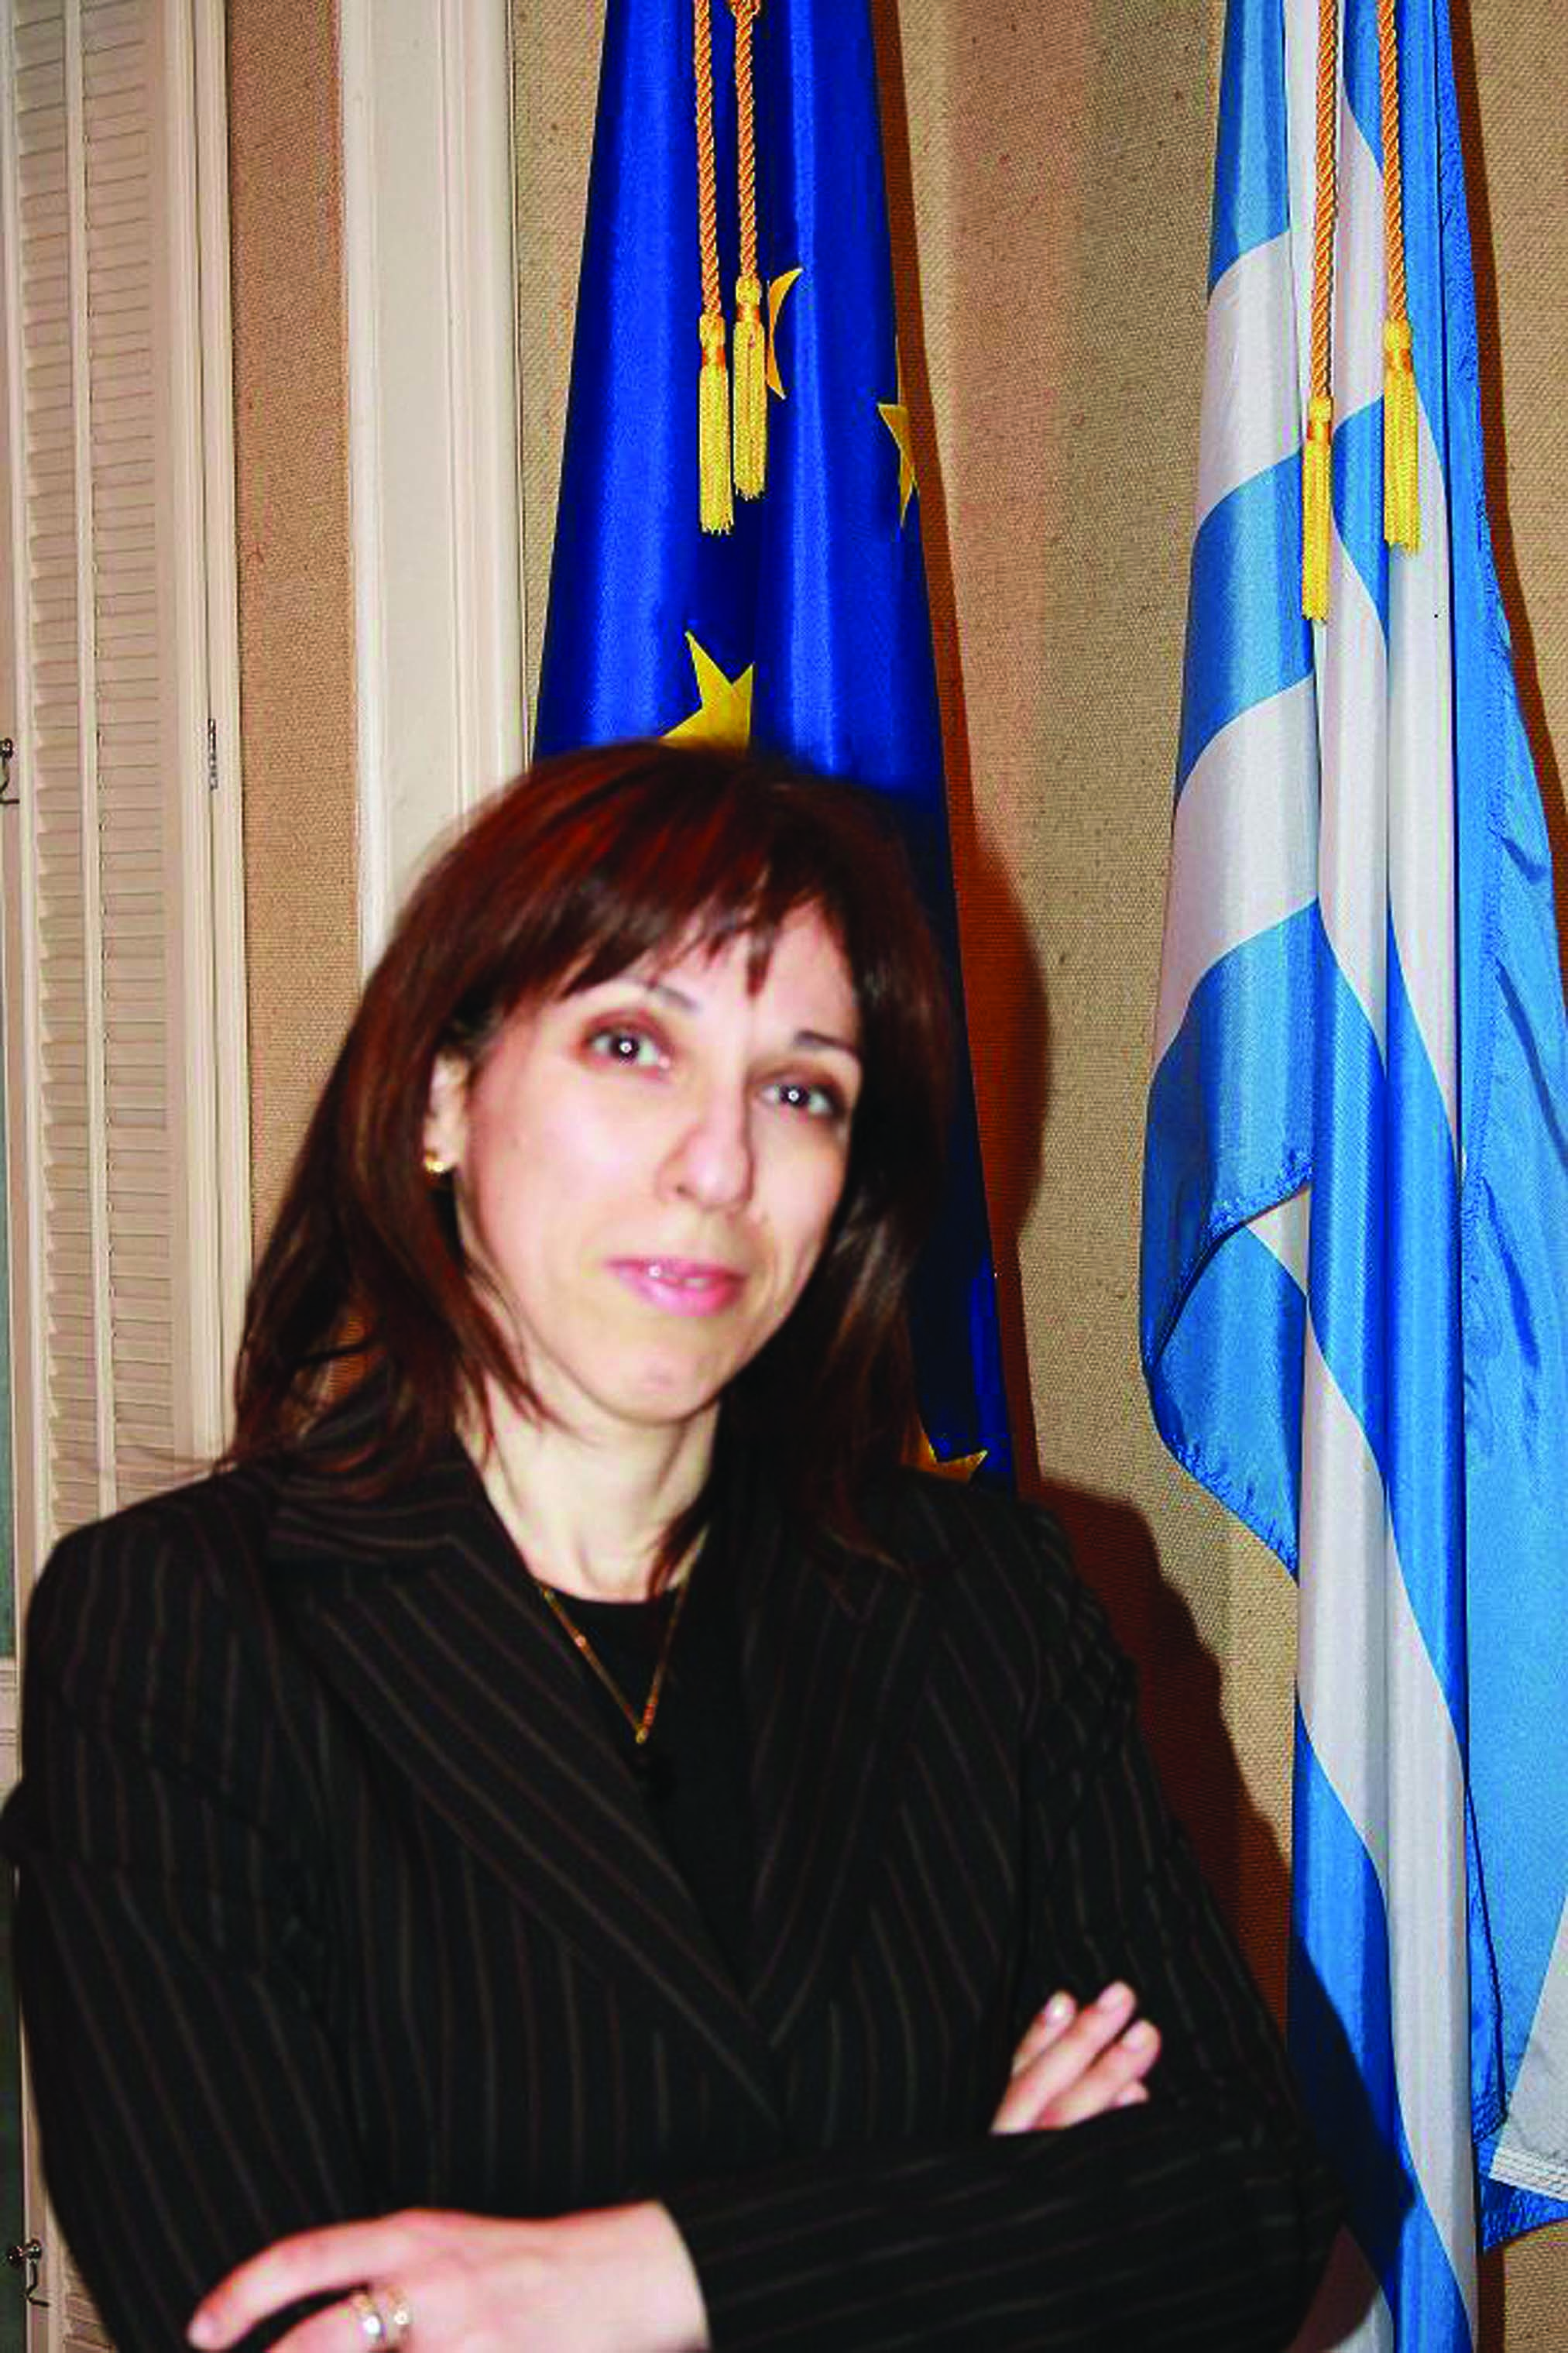 Ioanna Efthymiadou, consul general of Greece for Chicago